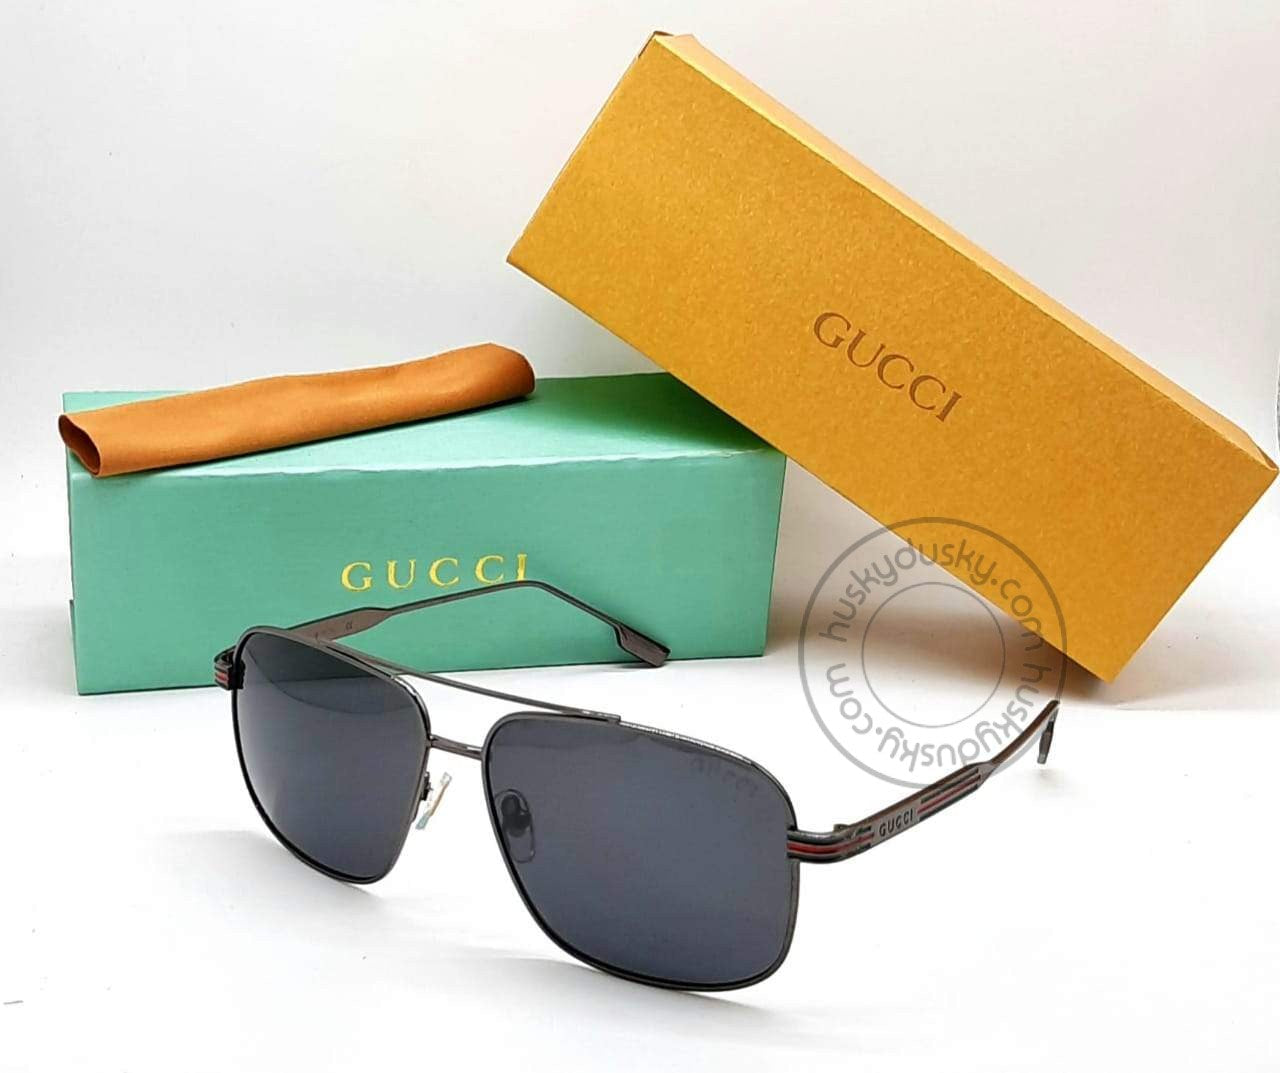 Gucci Branded black Color Design Glass Men's Sunglass for Man Woman or Girl GU-990 Black Stick Gift Sunglass